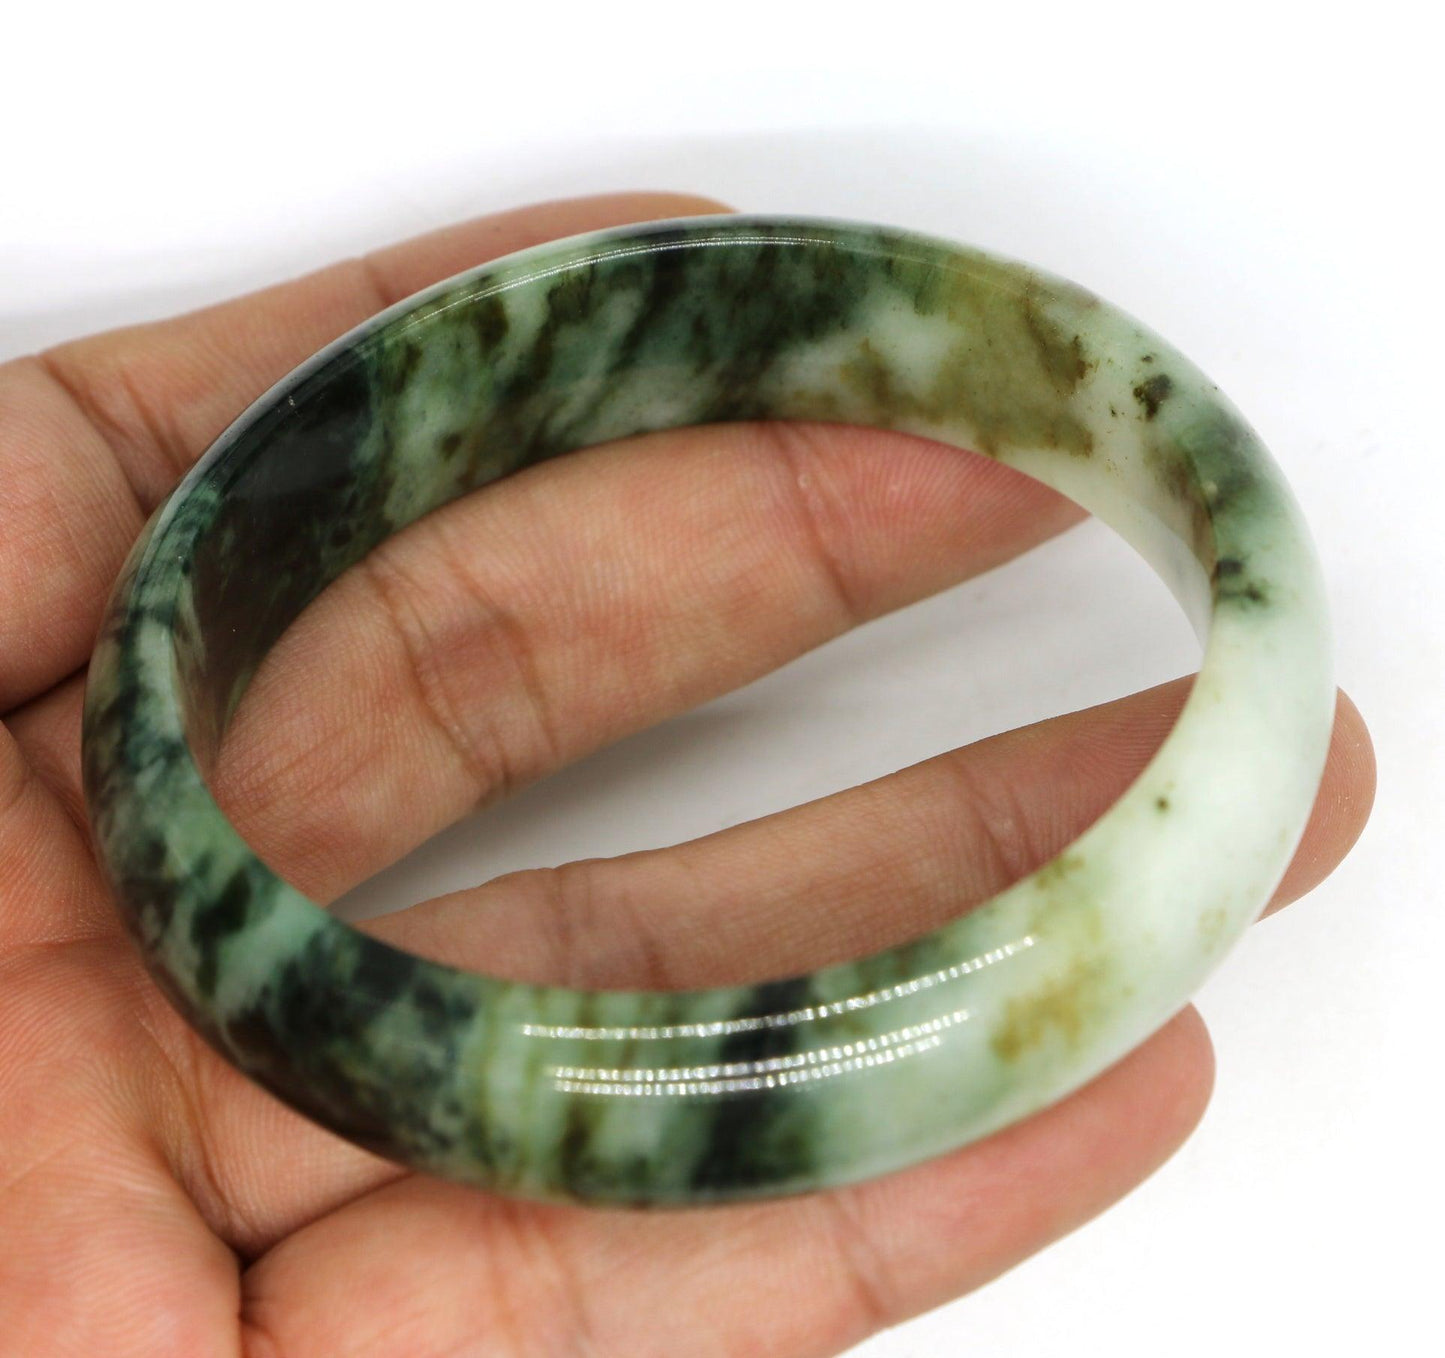 Type A Certified Jadeite Jade Bangle Size 56 -58mm B0BN7TBWWT - Jade-collector.com